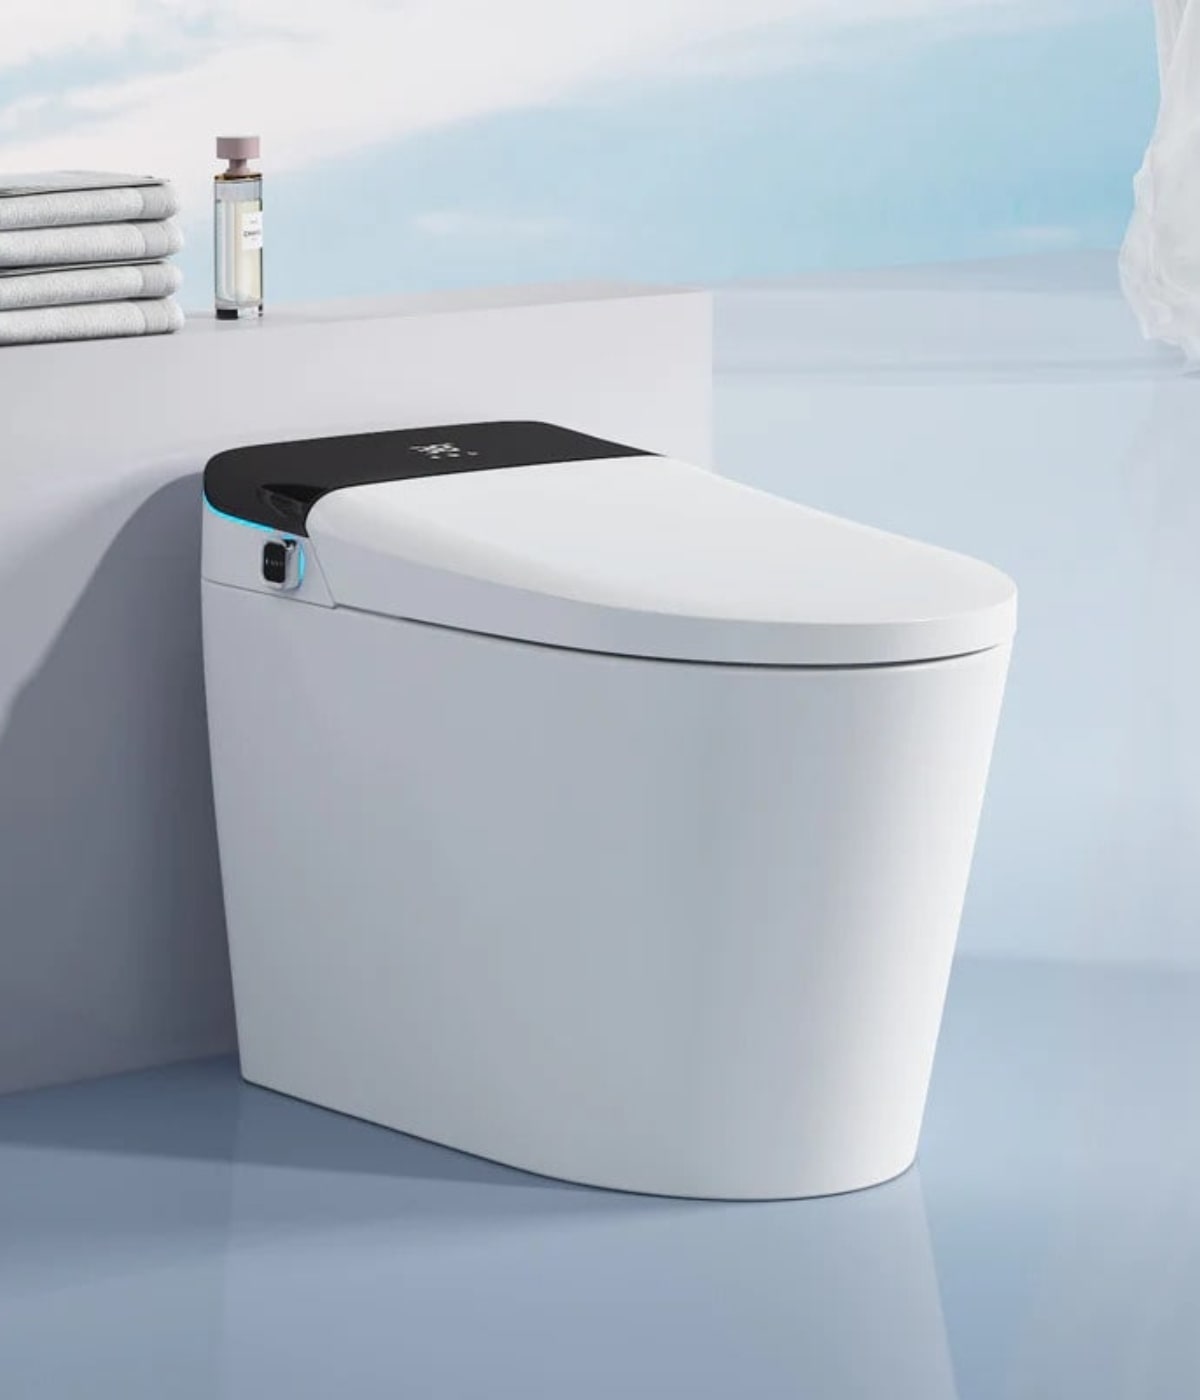 Every Luxury bathroom vanity needs a smart toilet